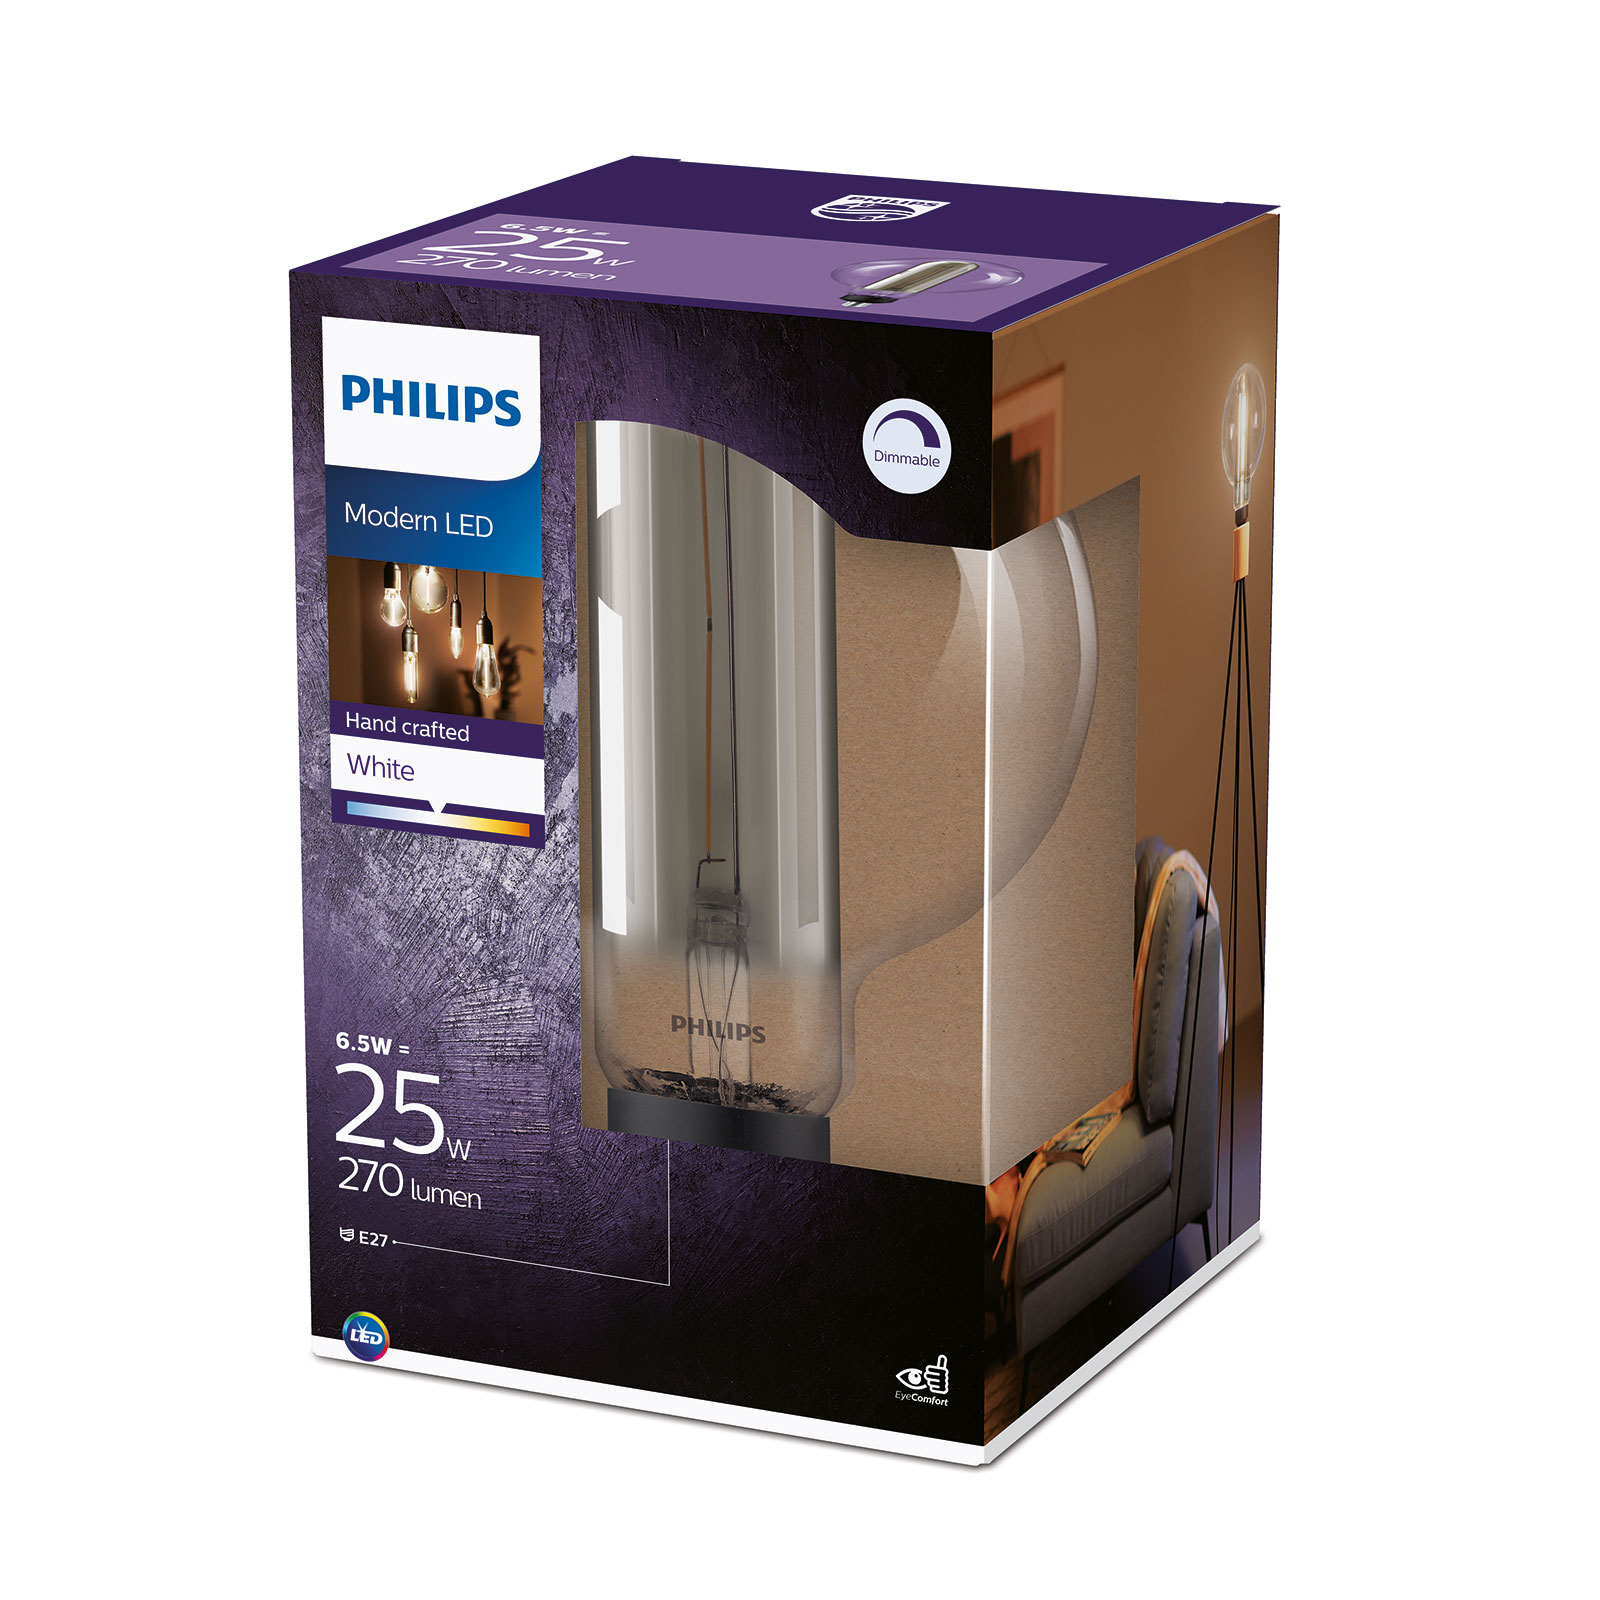 Philips Giant Globe опушена LED лампа E27 6,5W